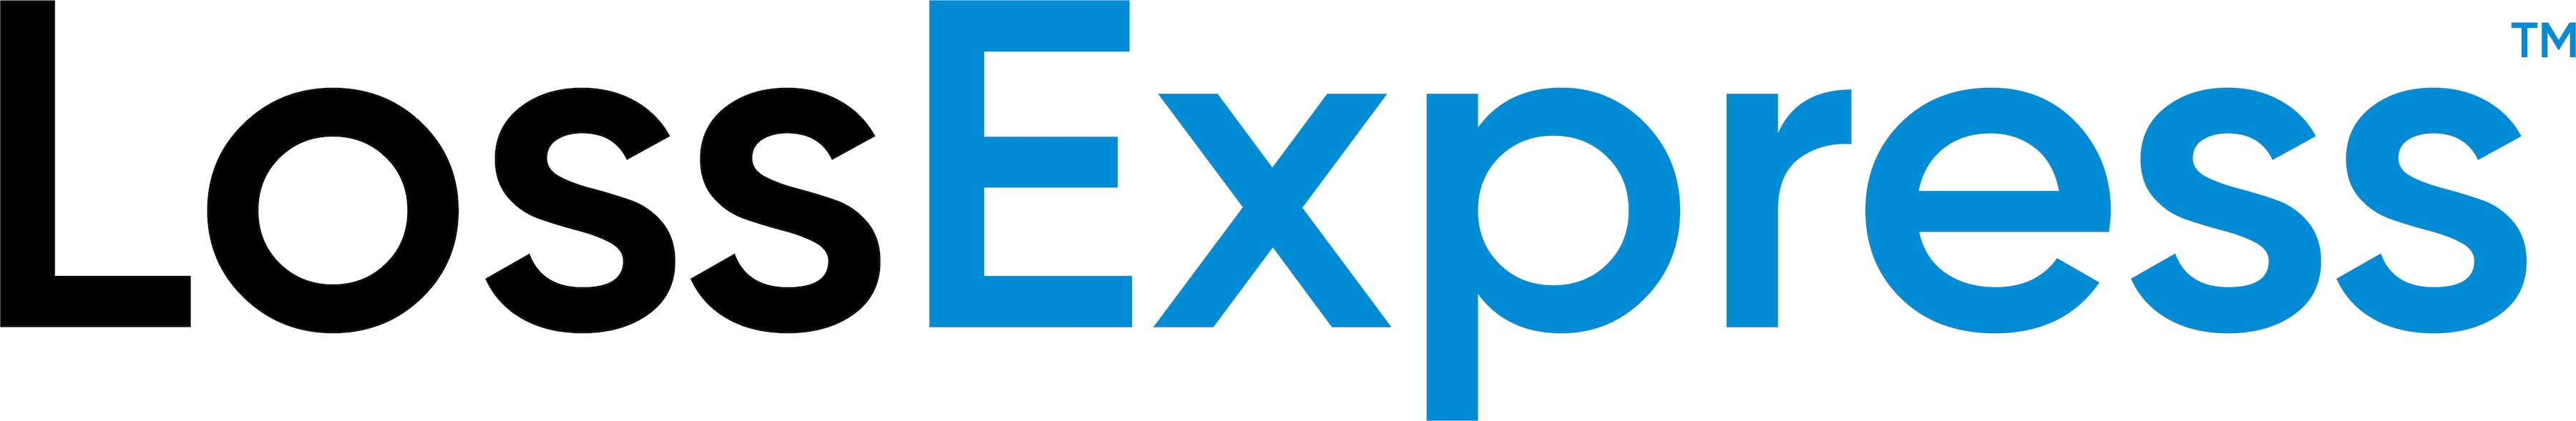 lossexpress-logo[1].jpg